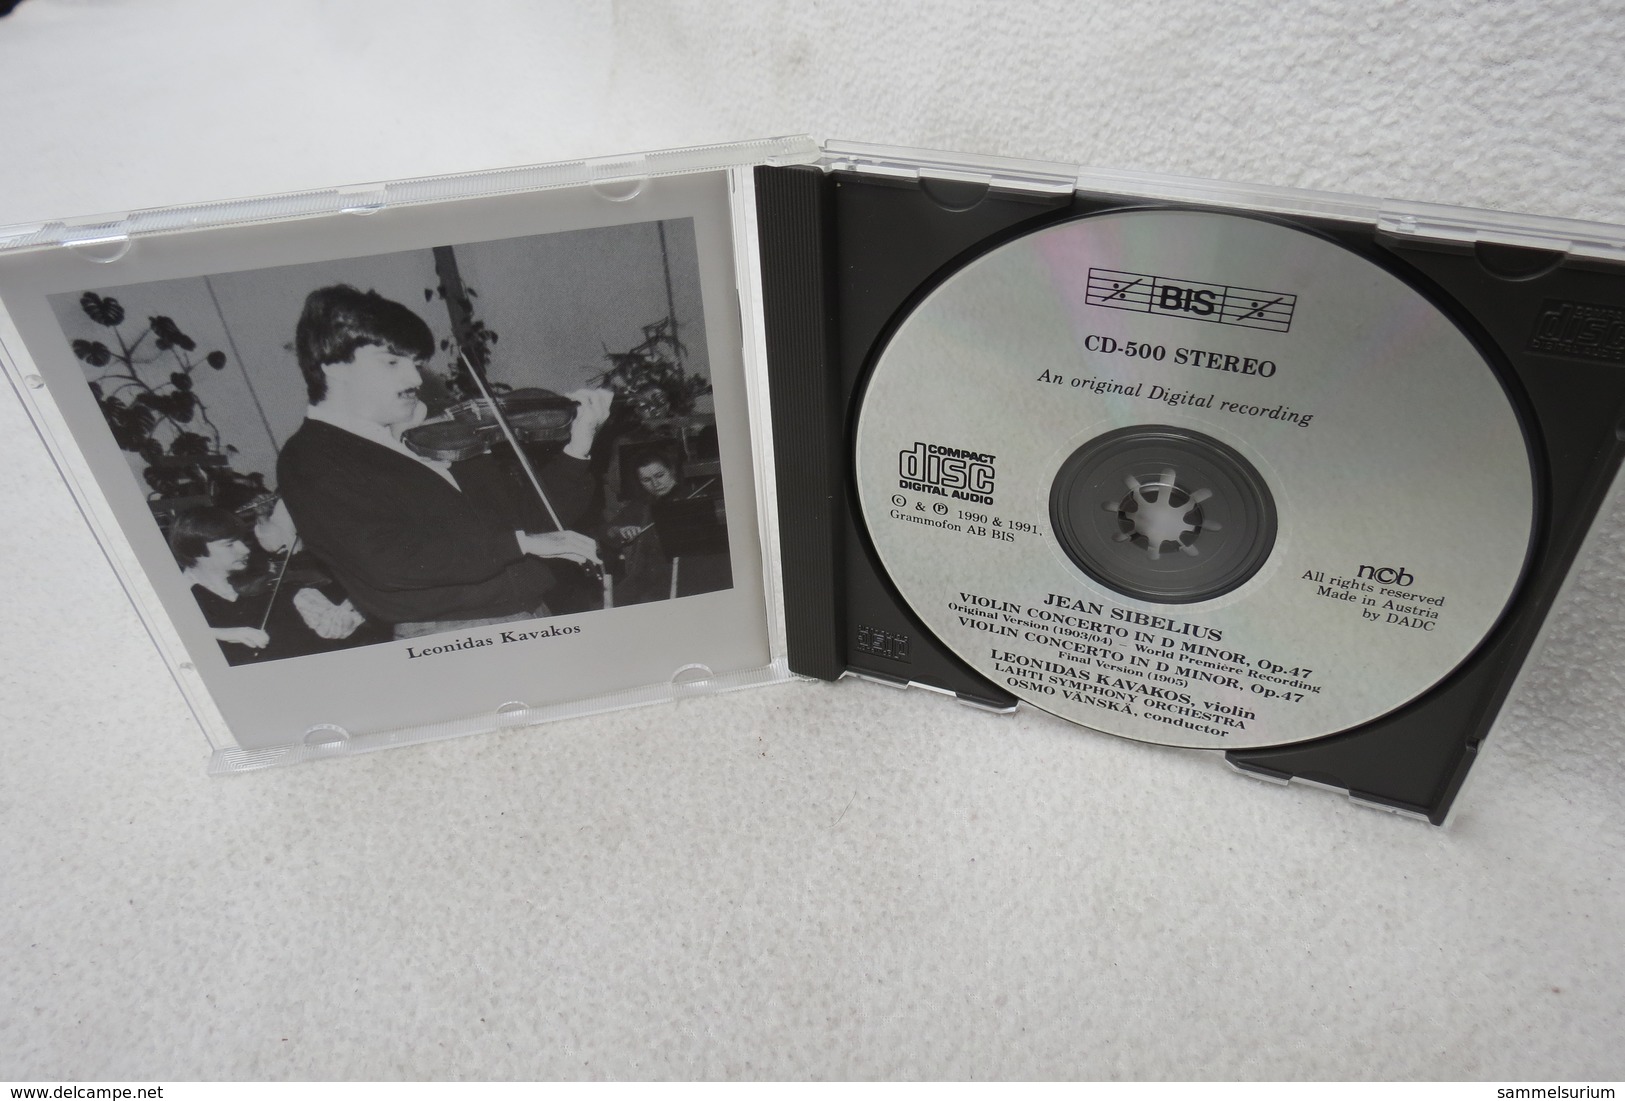 CD "Jean Sibelius" Violin Concerto In D Minor, Op. 47, Leonidas Kavakos - Klassik